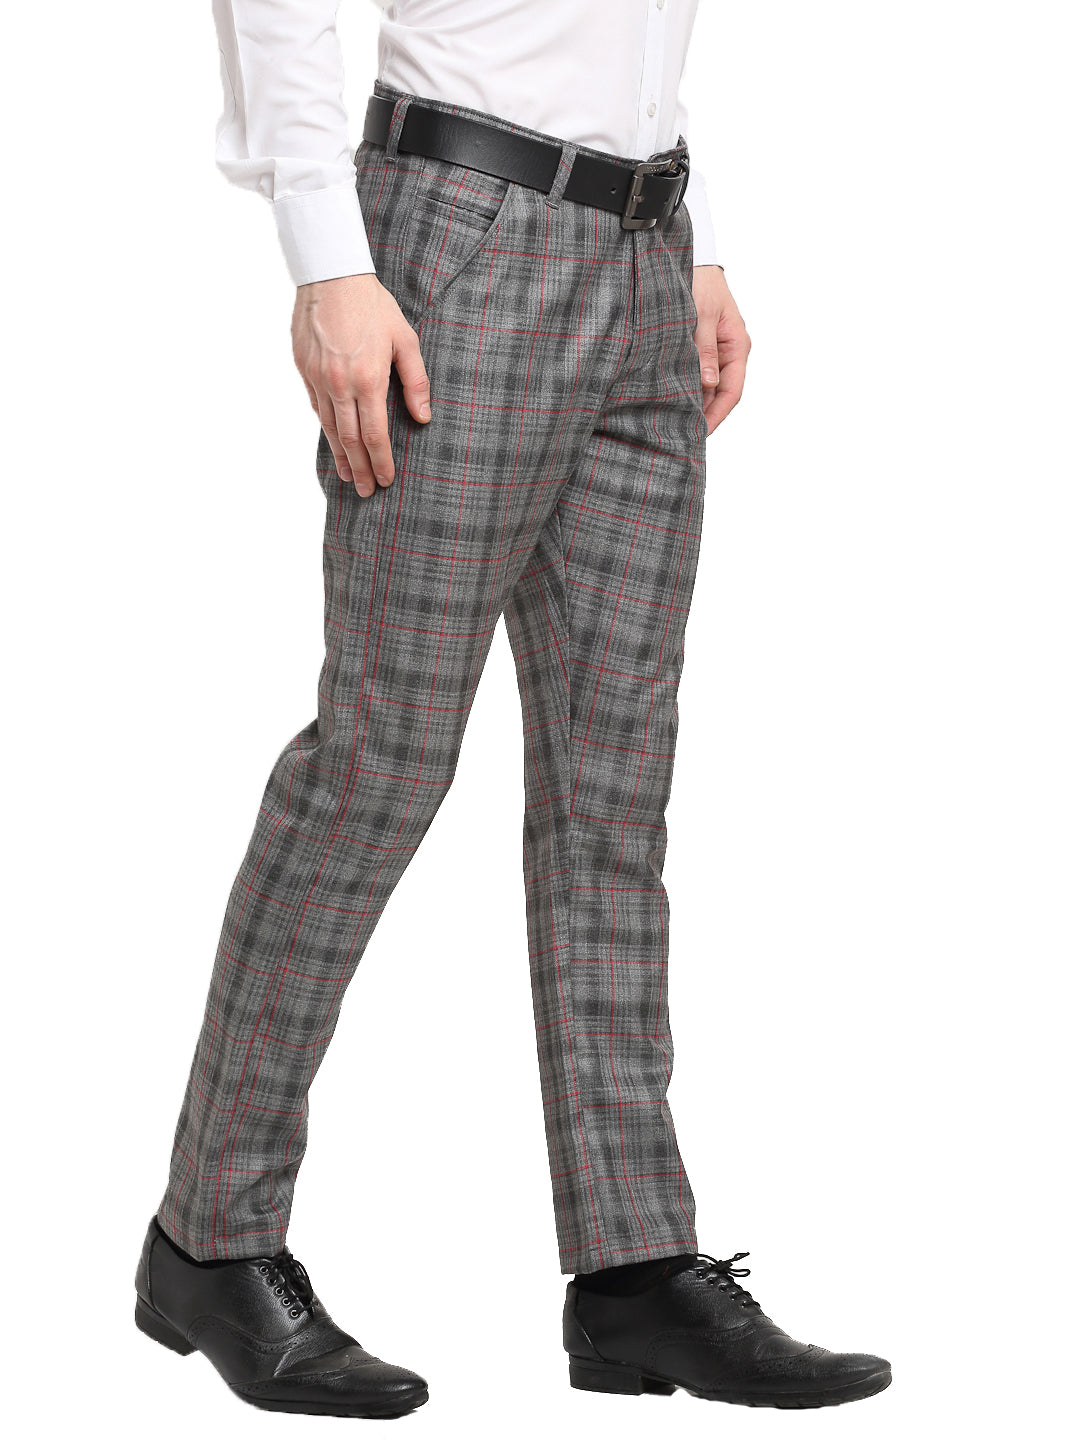 Men's Blue Cotton Checked Formal Trousers, Trousers for men, पुरुषों की  पतलून - NOZ2TOZ, New Delhi | ID: 2851929714173